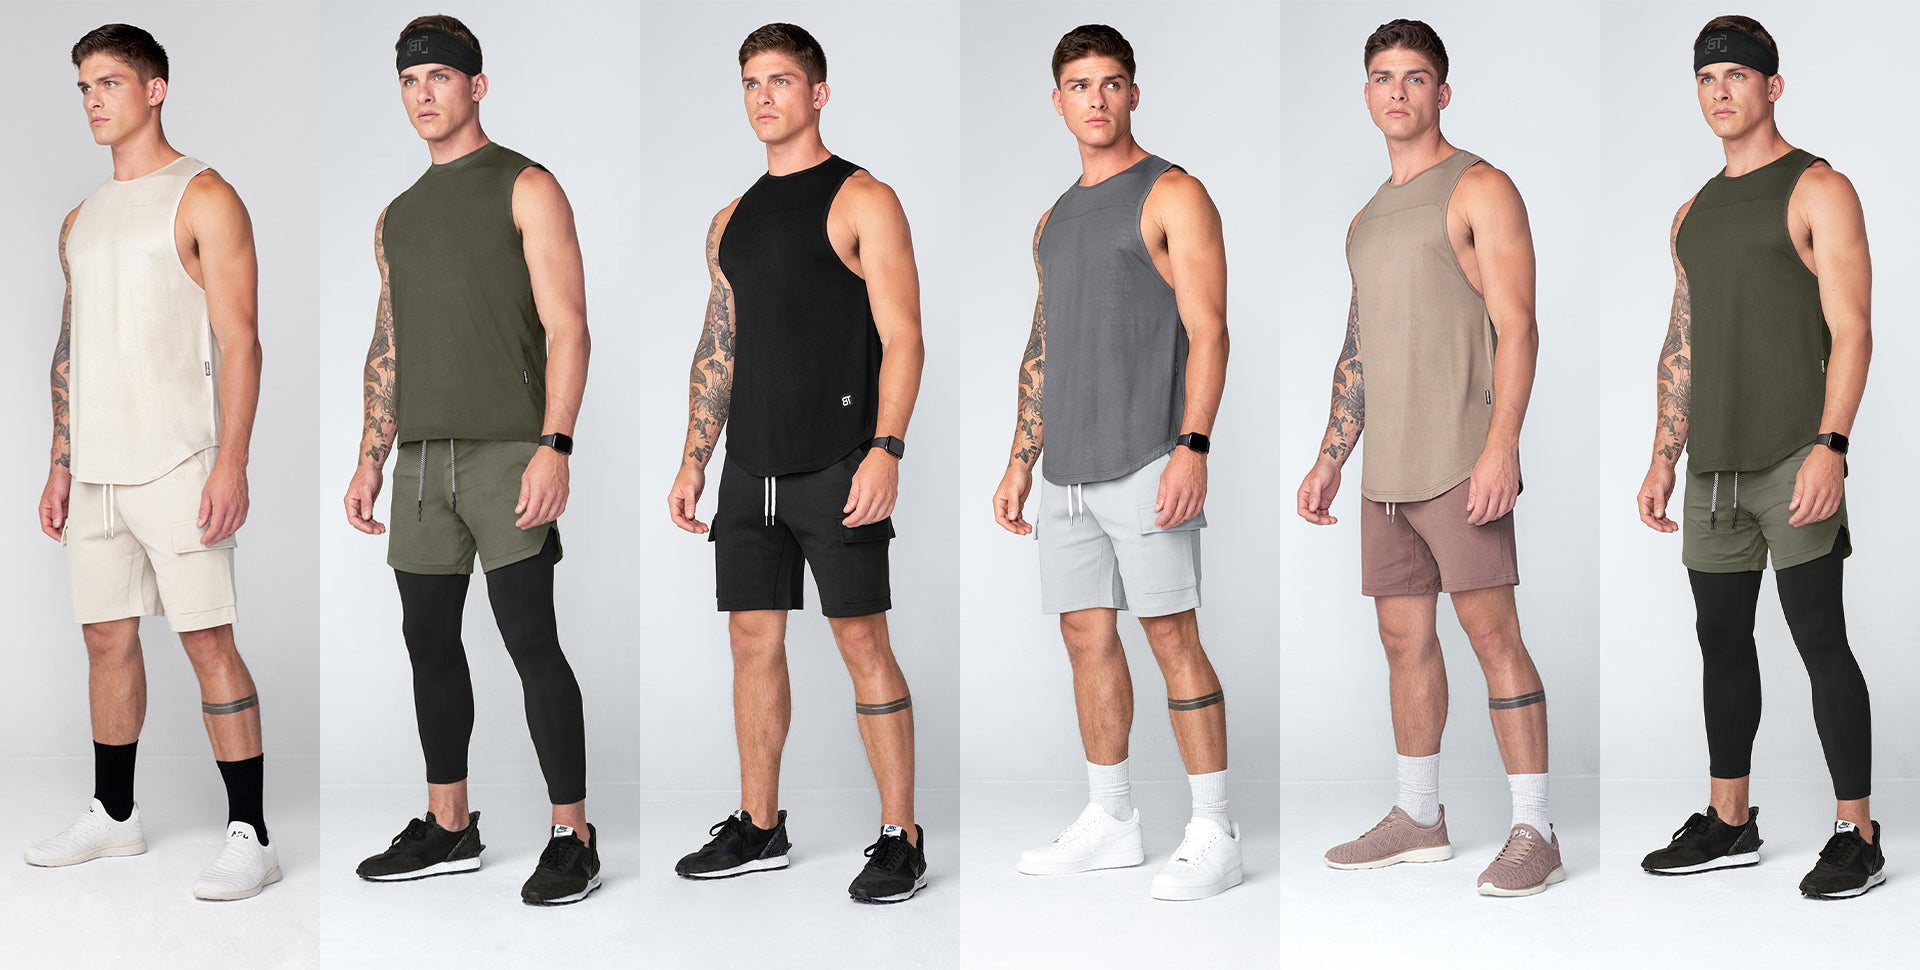 Men's Sleeveless Exercise & Fitness Shirts